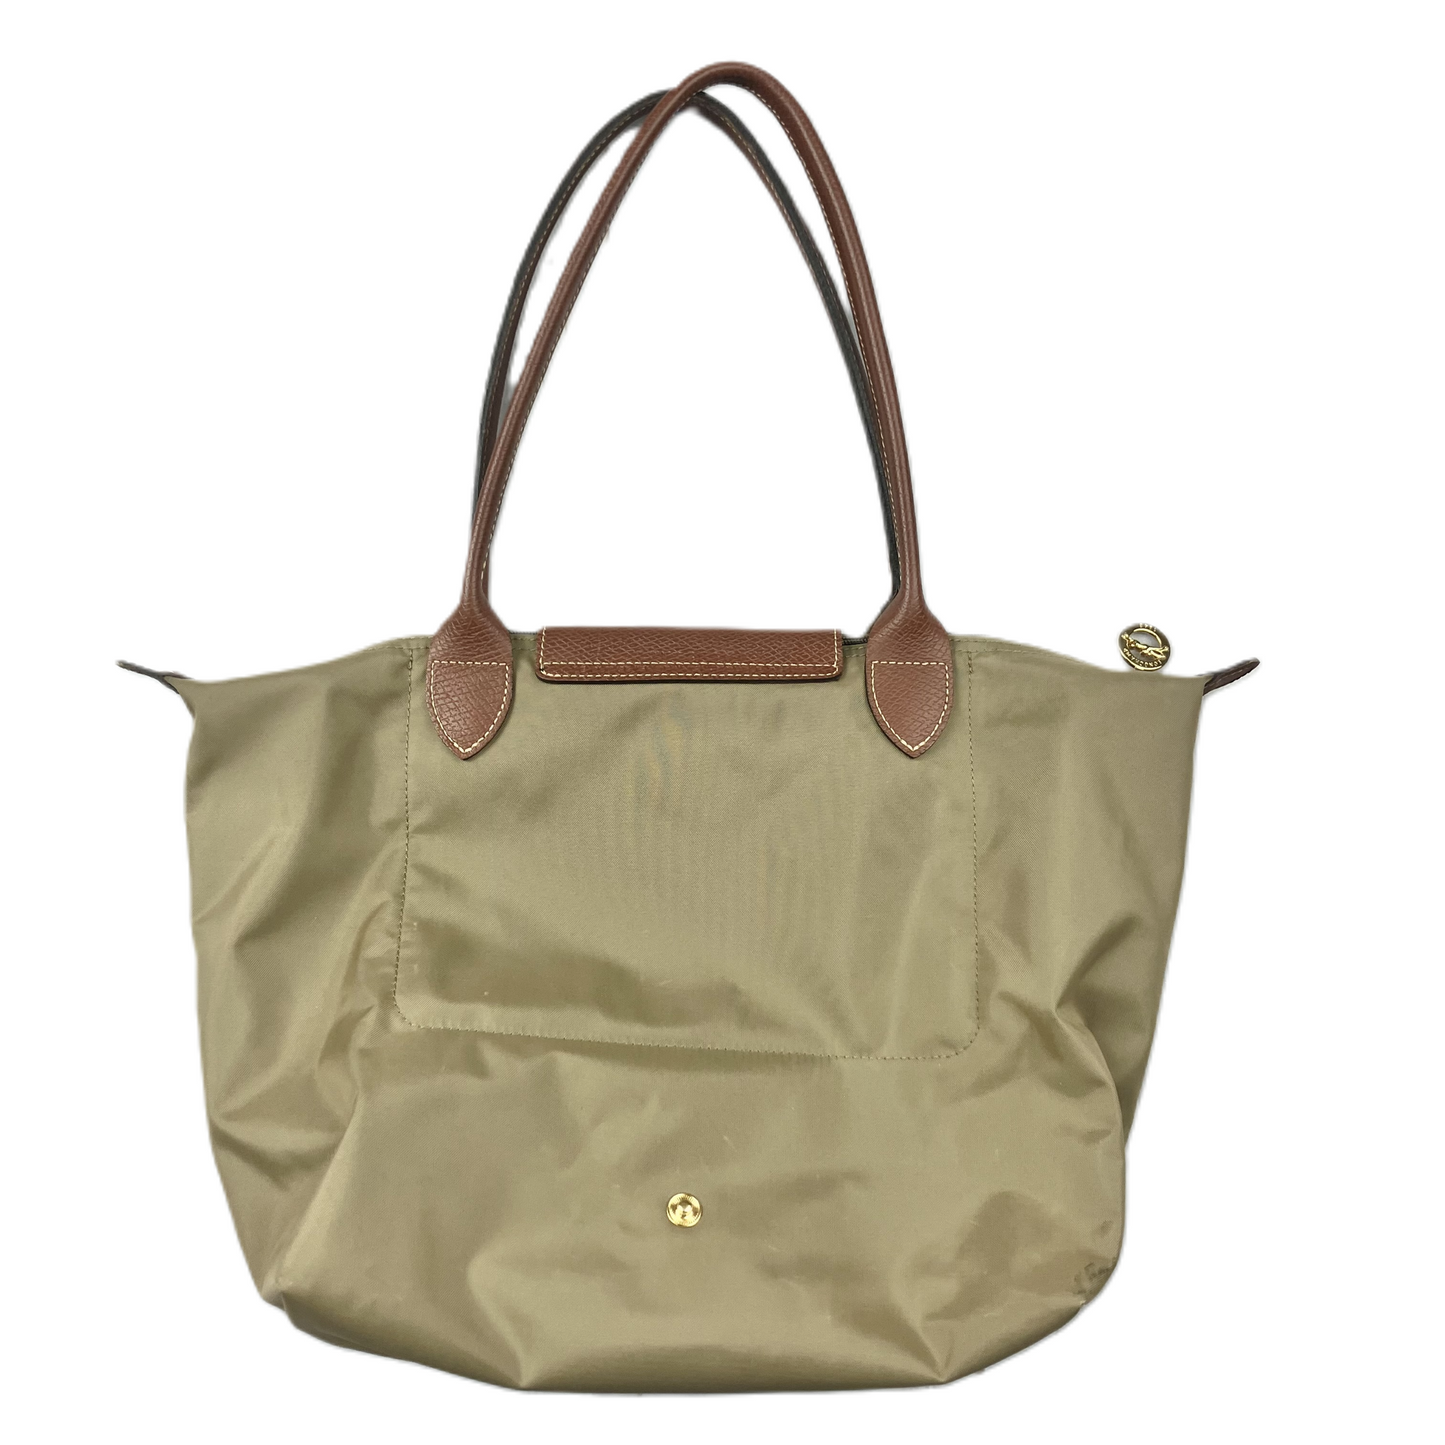 Handbag Designer By Longchamp, Size: Medium